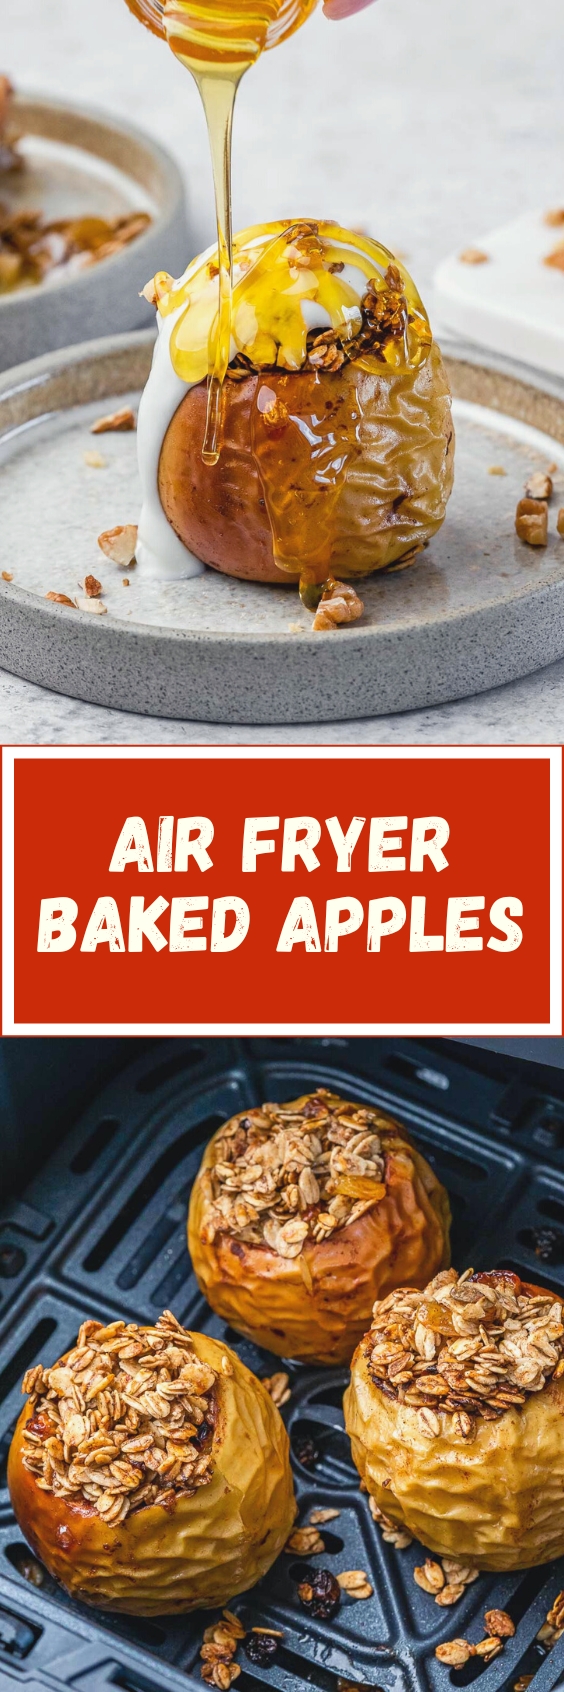 https://cleanfoodcrush.com/wp-content/uploads/2022/12/cfc-Air-Fryer-Baked-Apples.jpg